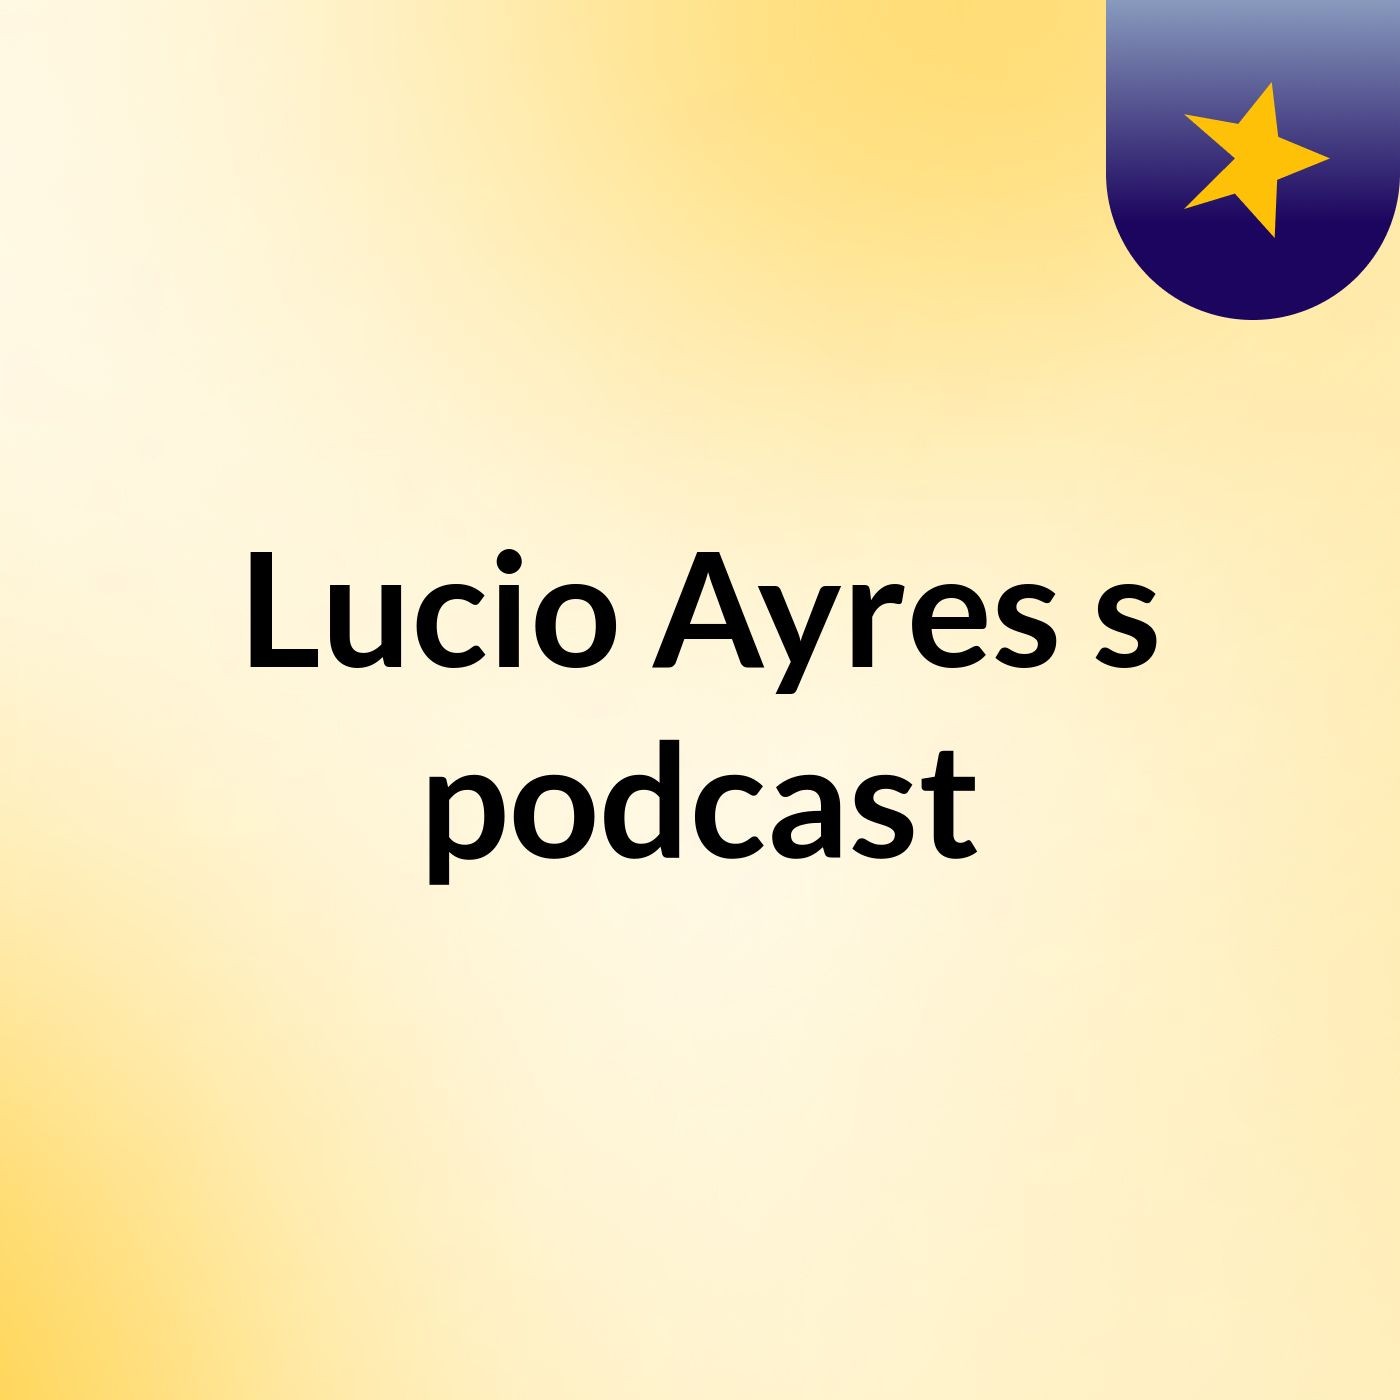 Lucio Ayres's podcast